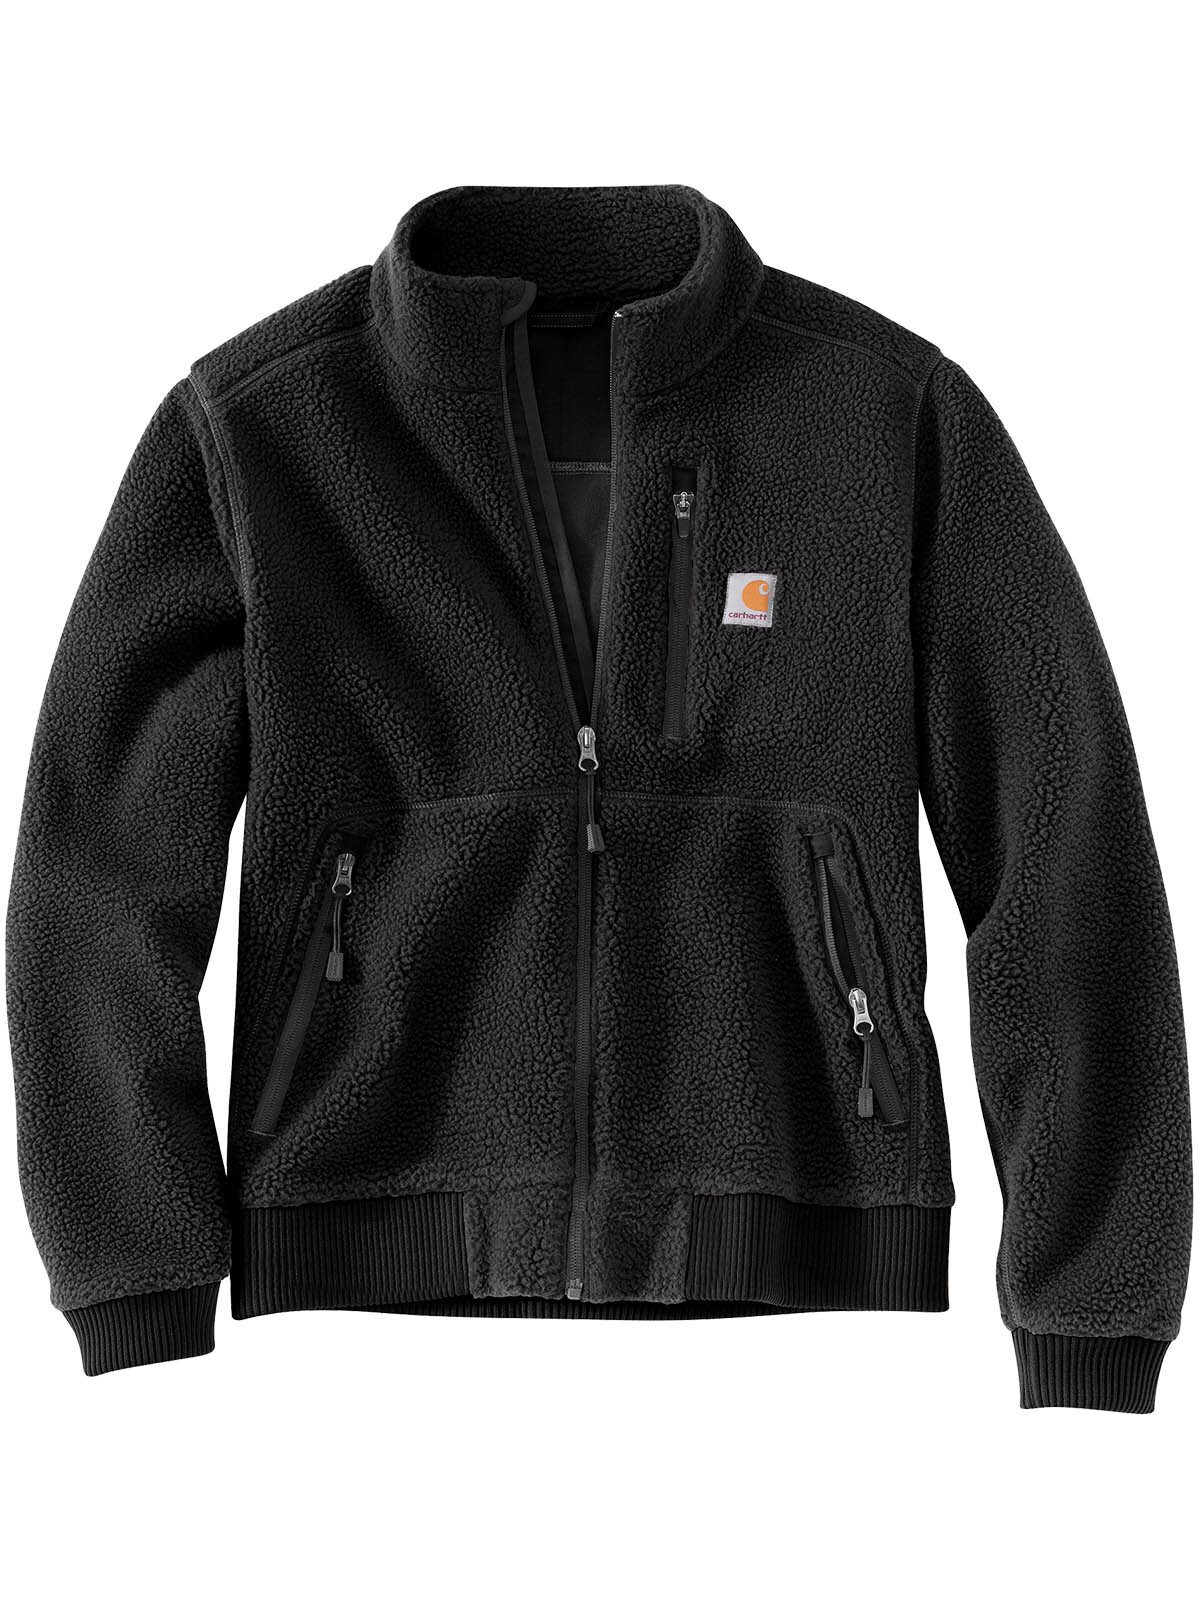 Carhartt Sweatshirt 103913-BLK Carhartt Fleece